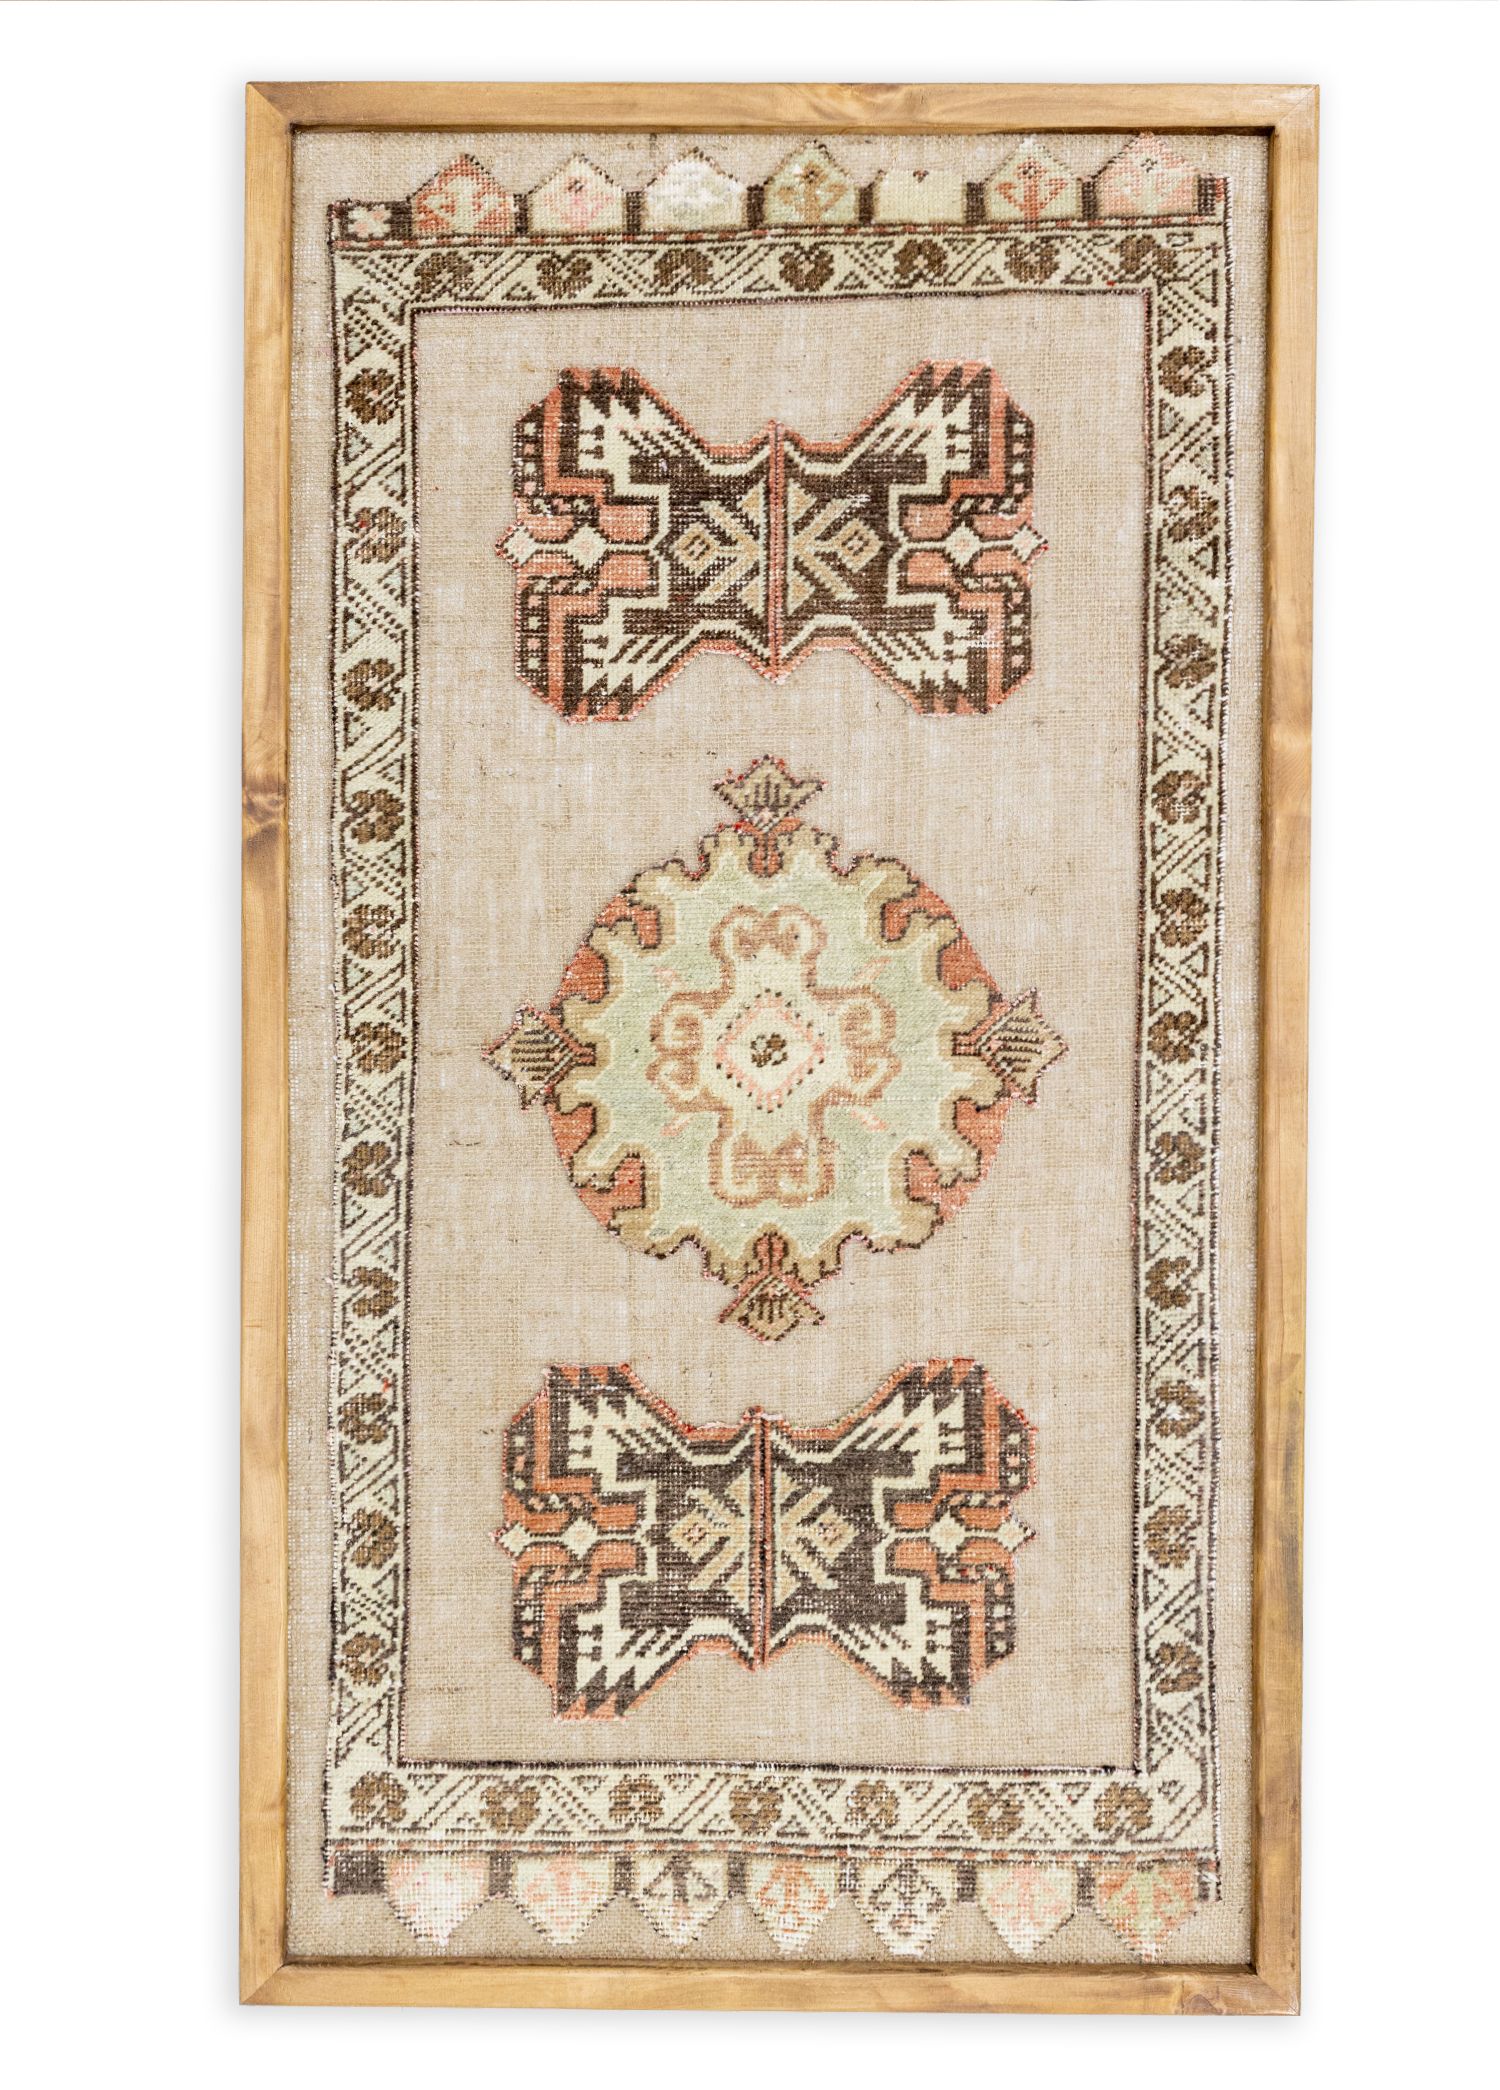 Auda Hand Woven Carpet Patterned Decorative Painting 60x110 cm